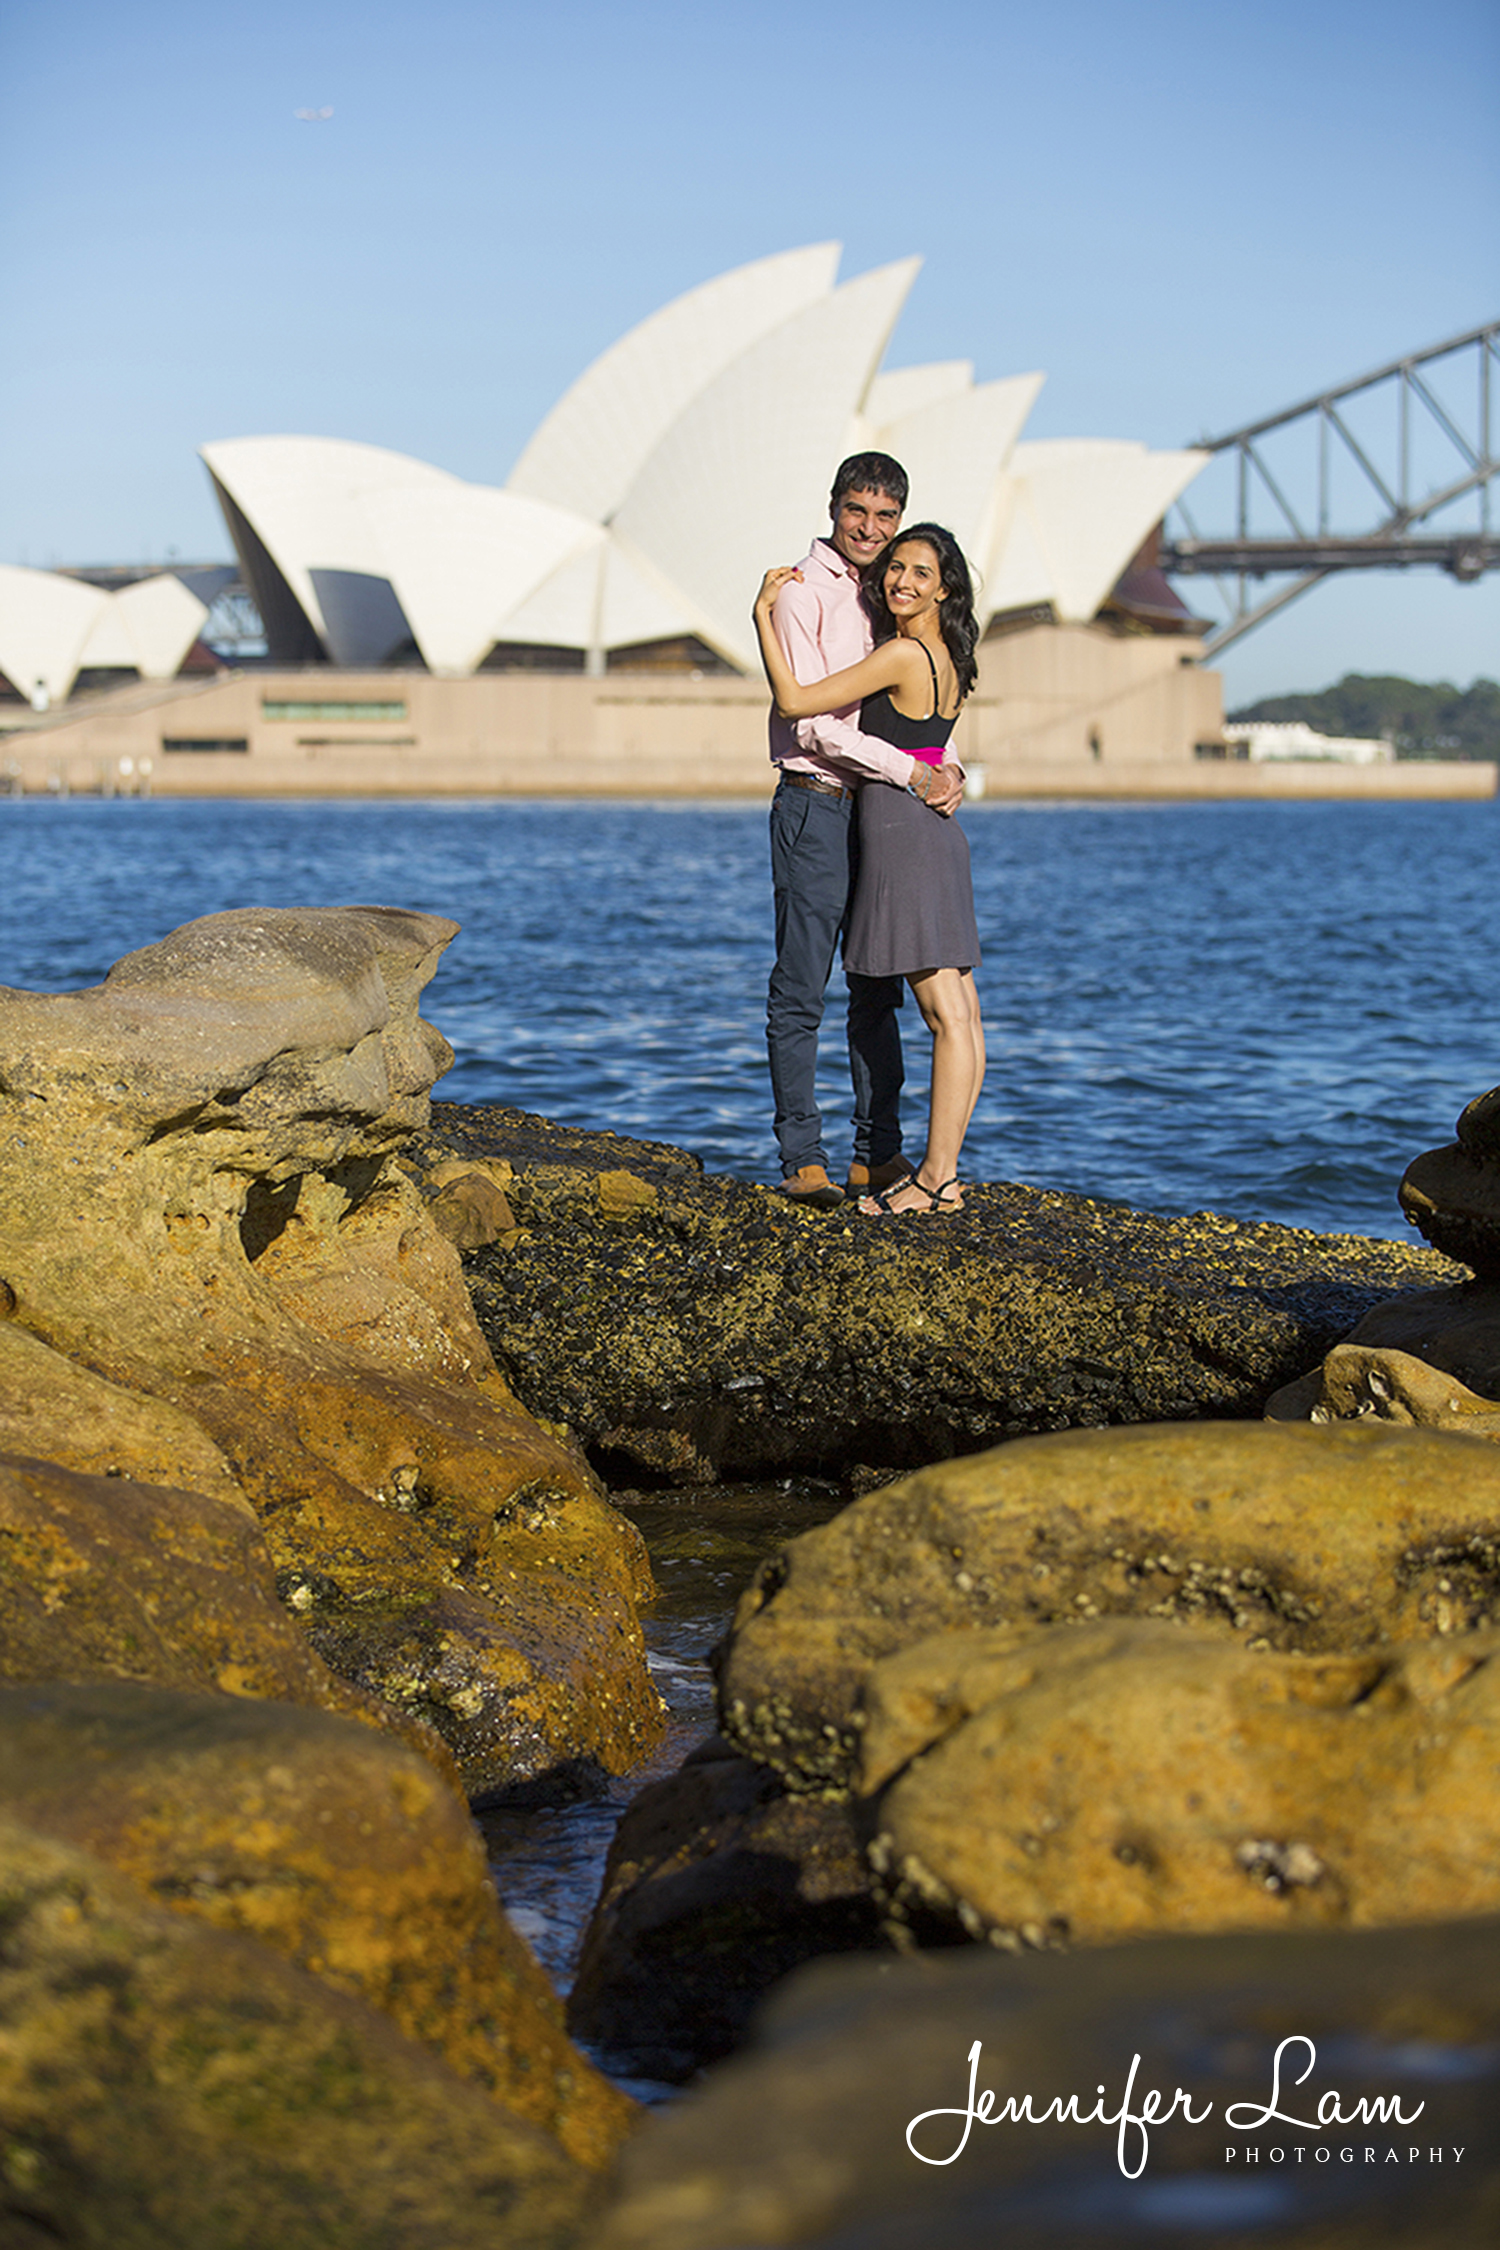 S&J - Jennifer Lam Photography - Sydney Wedding Photographer (17).jpg